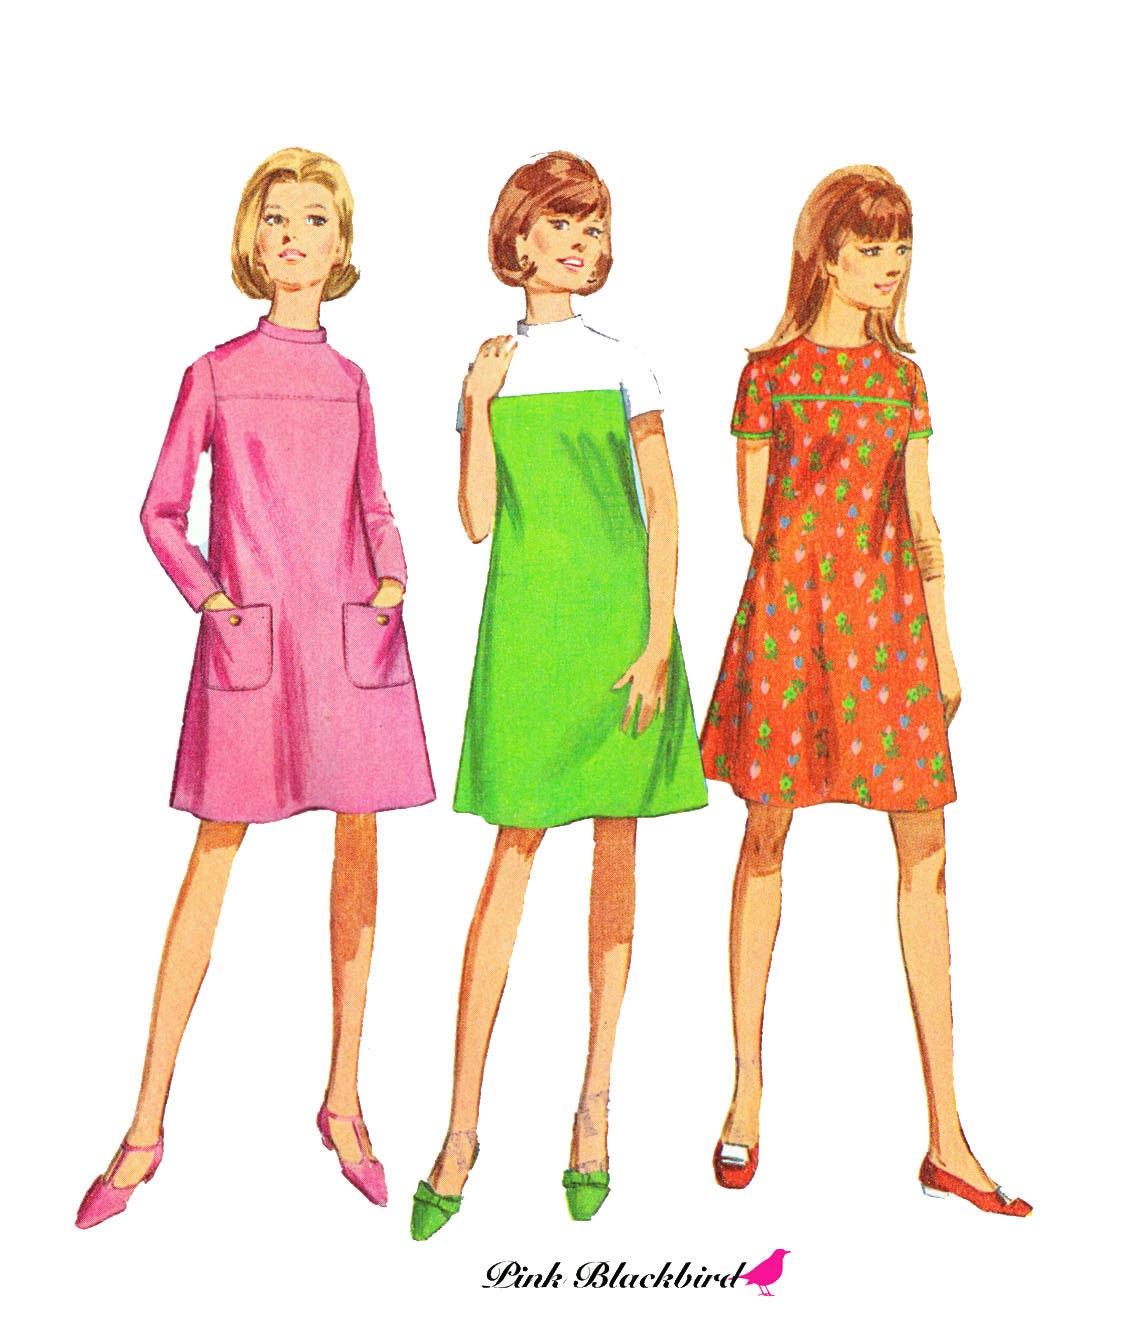 Mod 60s Dress Sewing Pattern. 1960s Simplicity by pinkblackbird